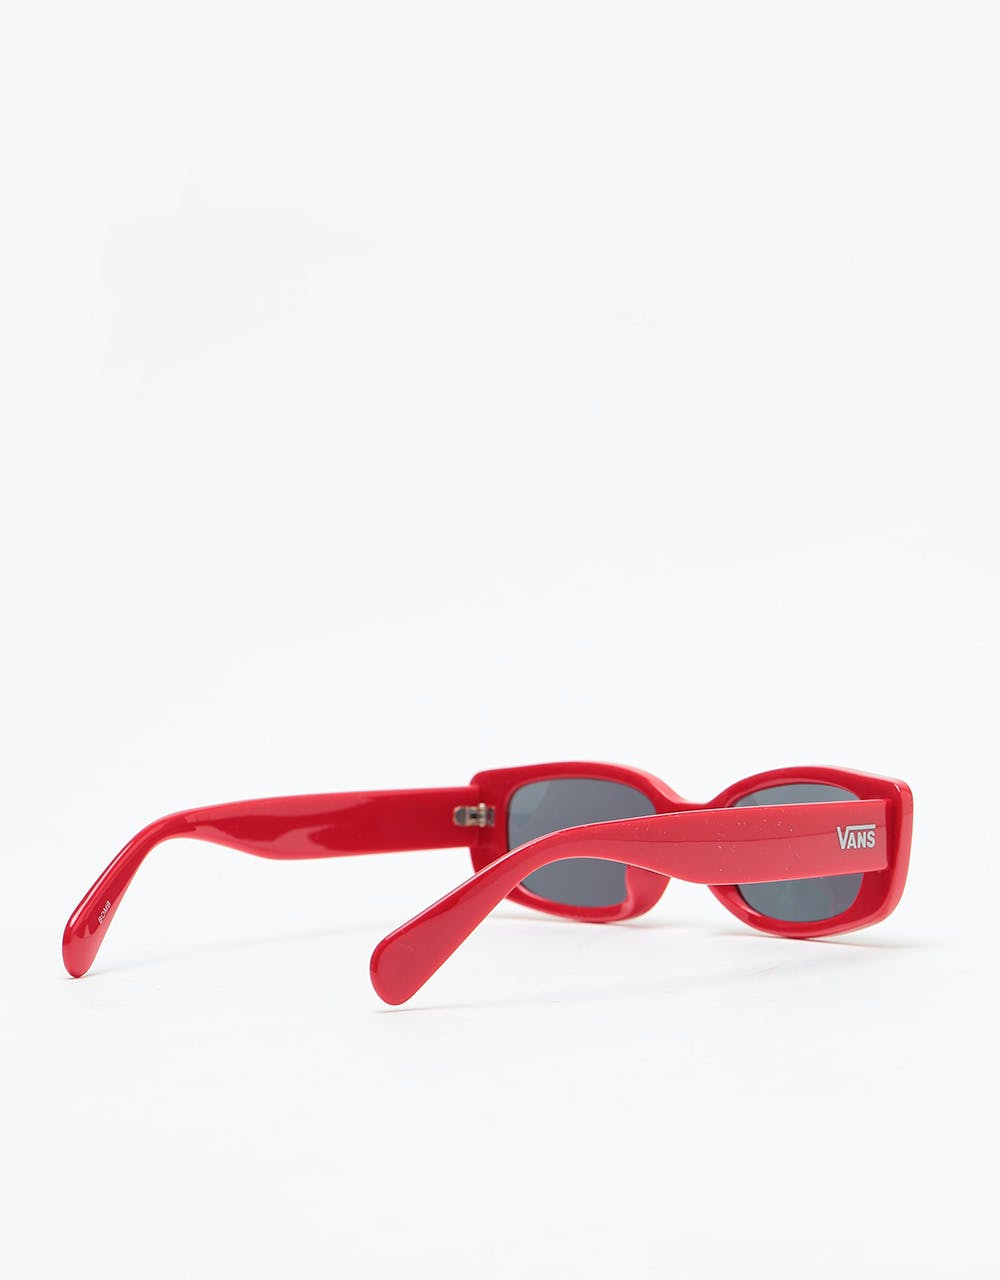 Vans Bomb Sunglasses - Racing Red